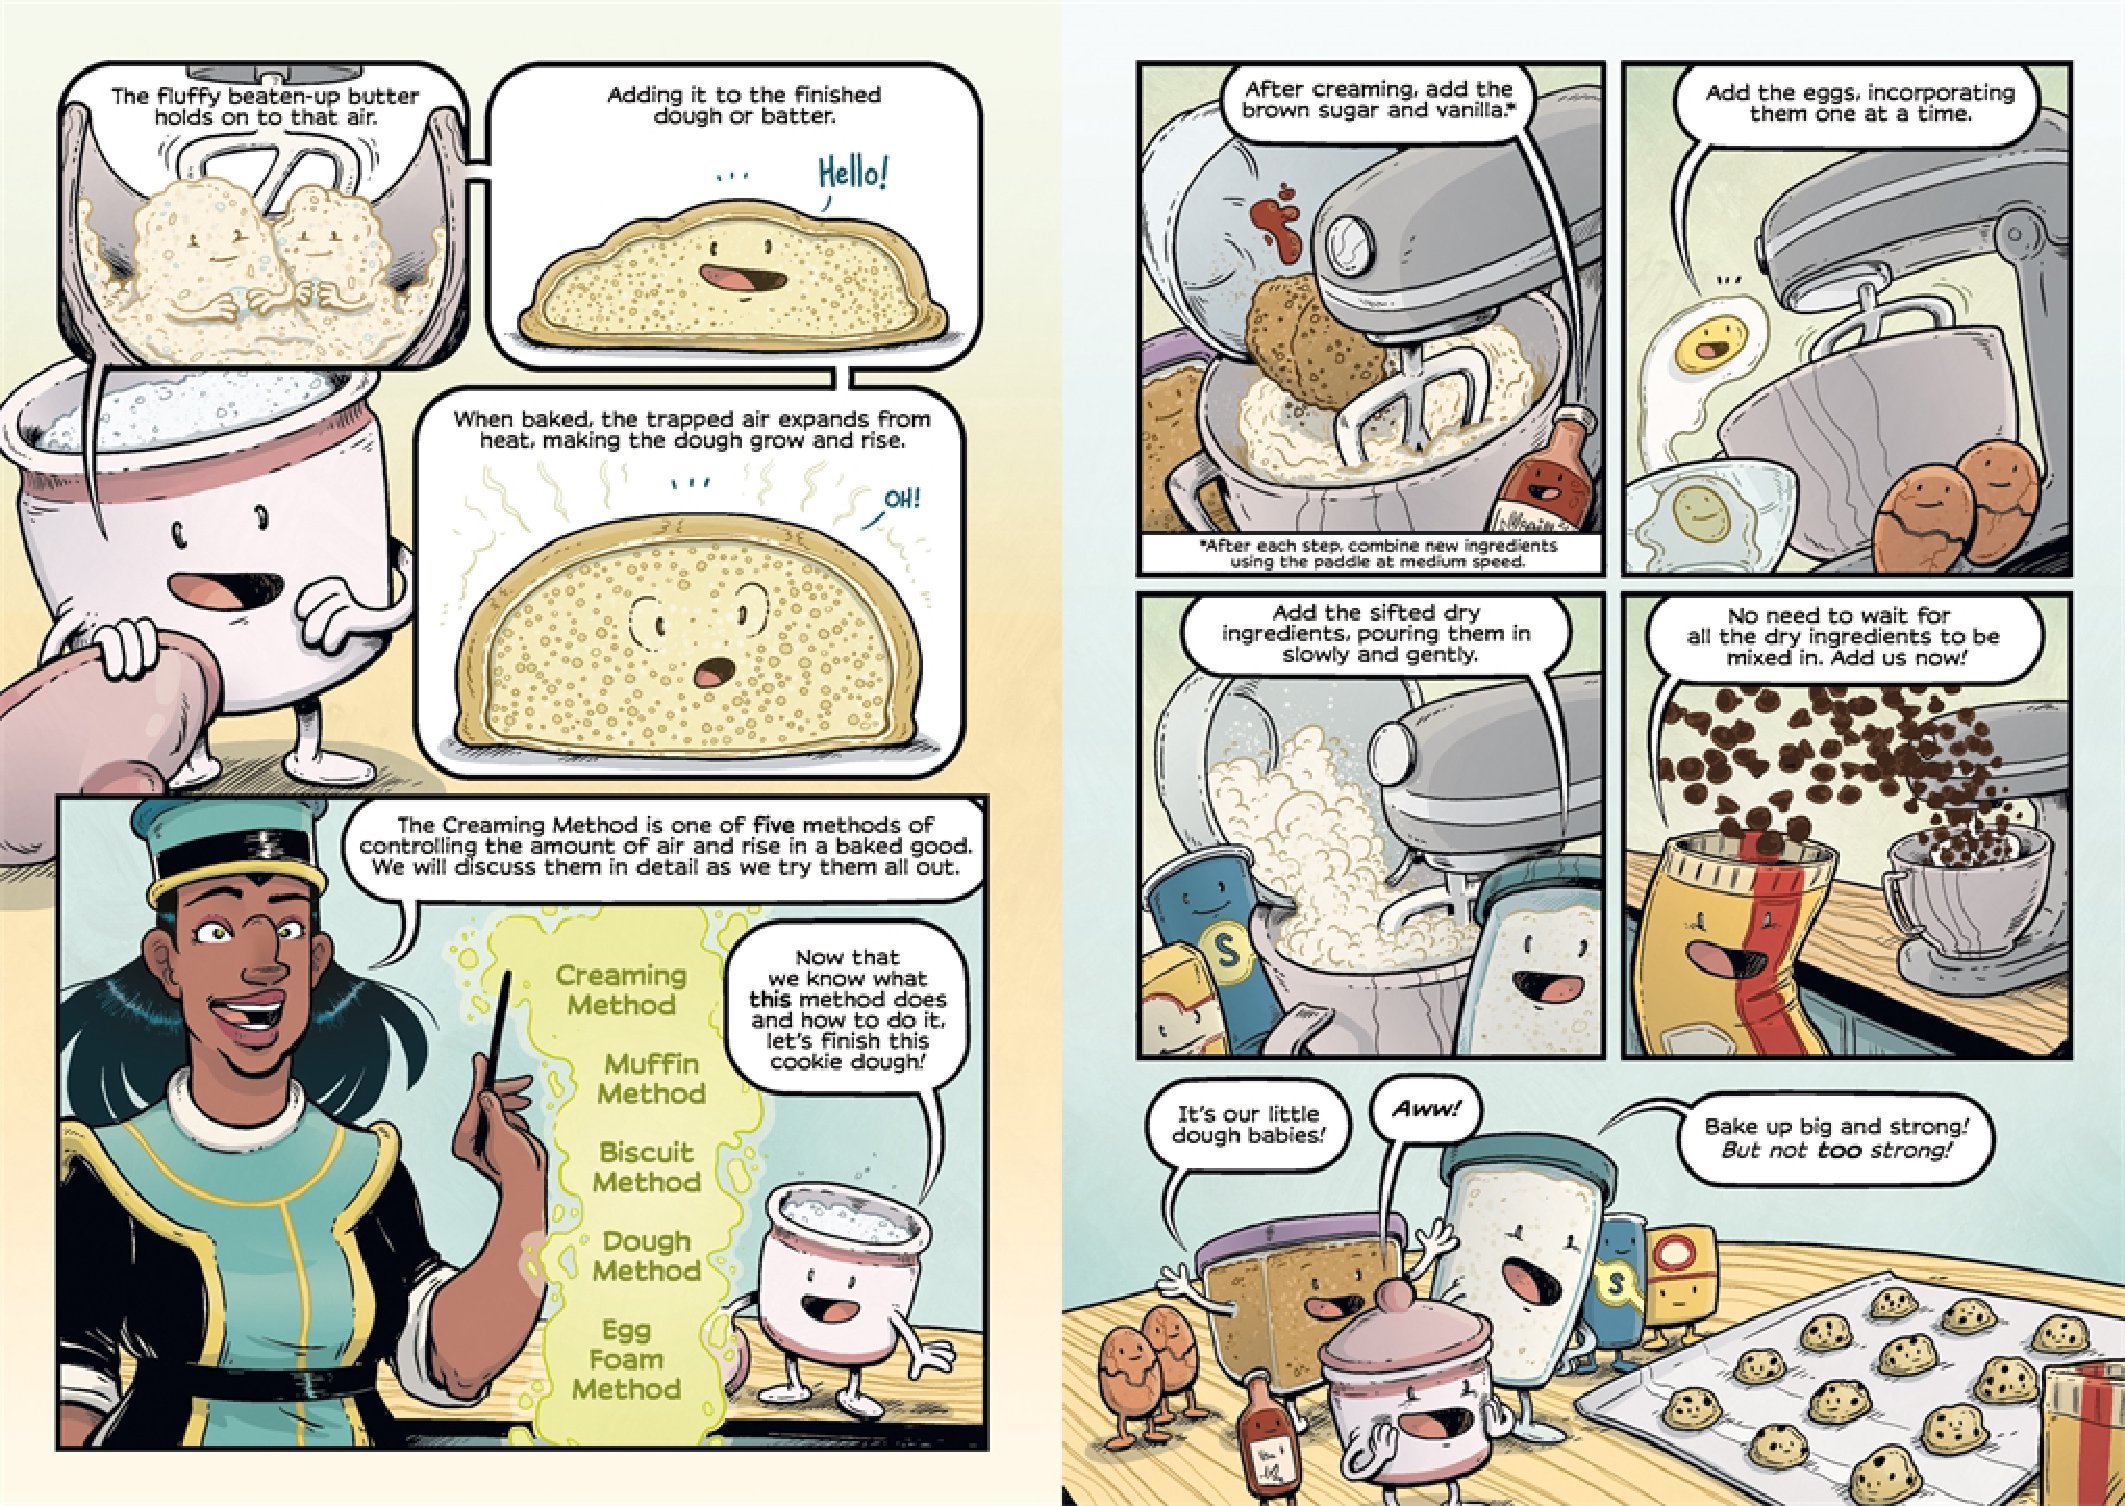 Maker Comics: Bake Like a Pro!